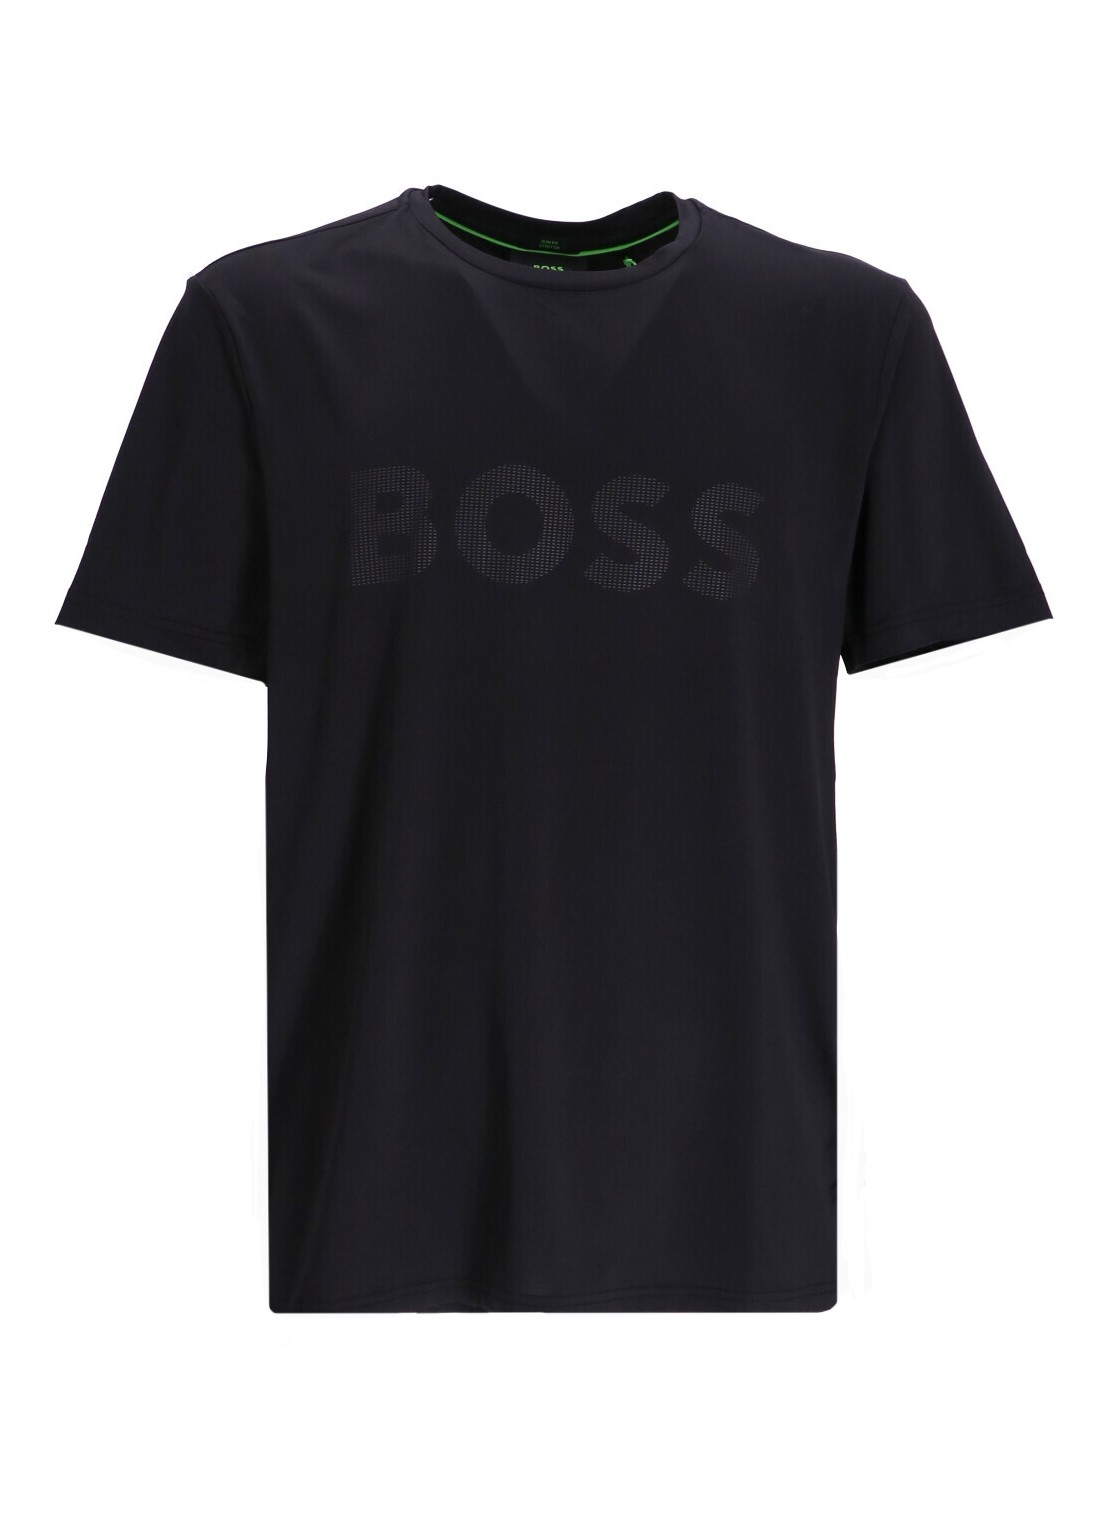 Camiseta boss t-shirt mantee active - 50506366 001 talla negro
 